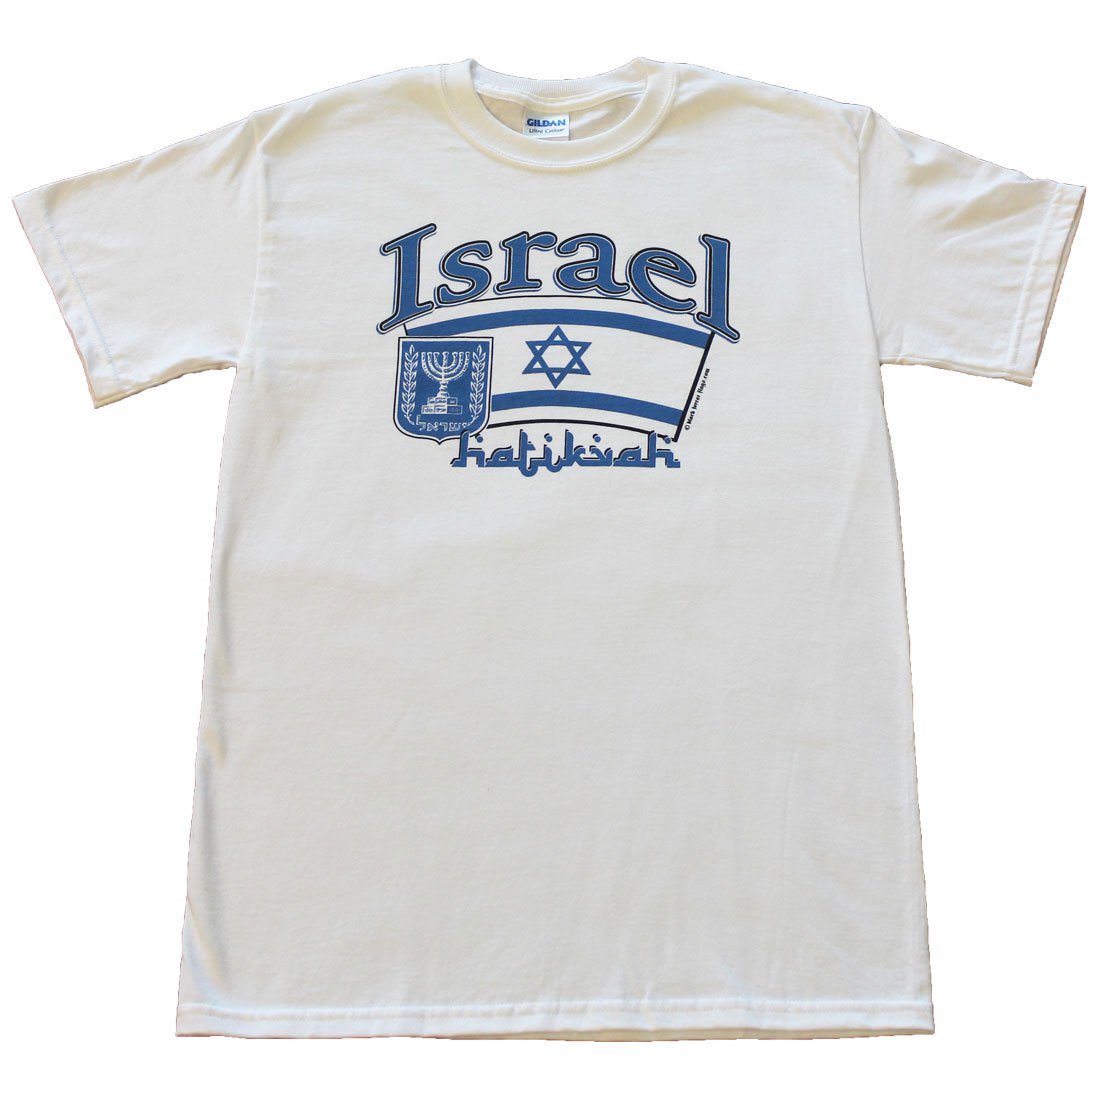 Israel International T-Shirt (XL)